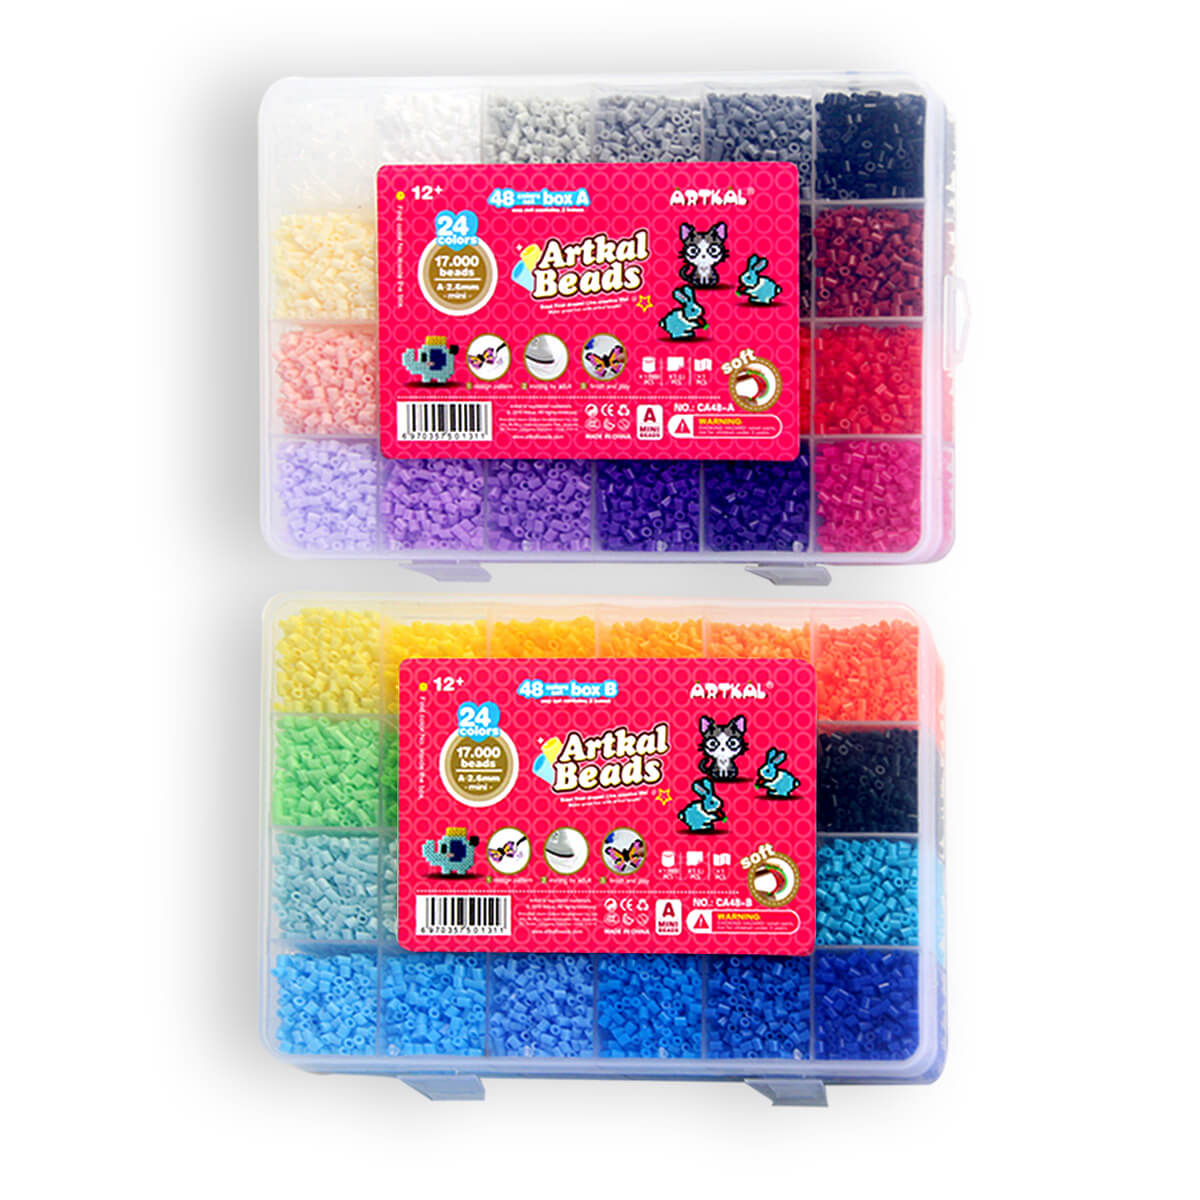 2.6mm Mini Artkal Beads Box Set 48 Colors for Making Fuse Be